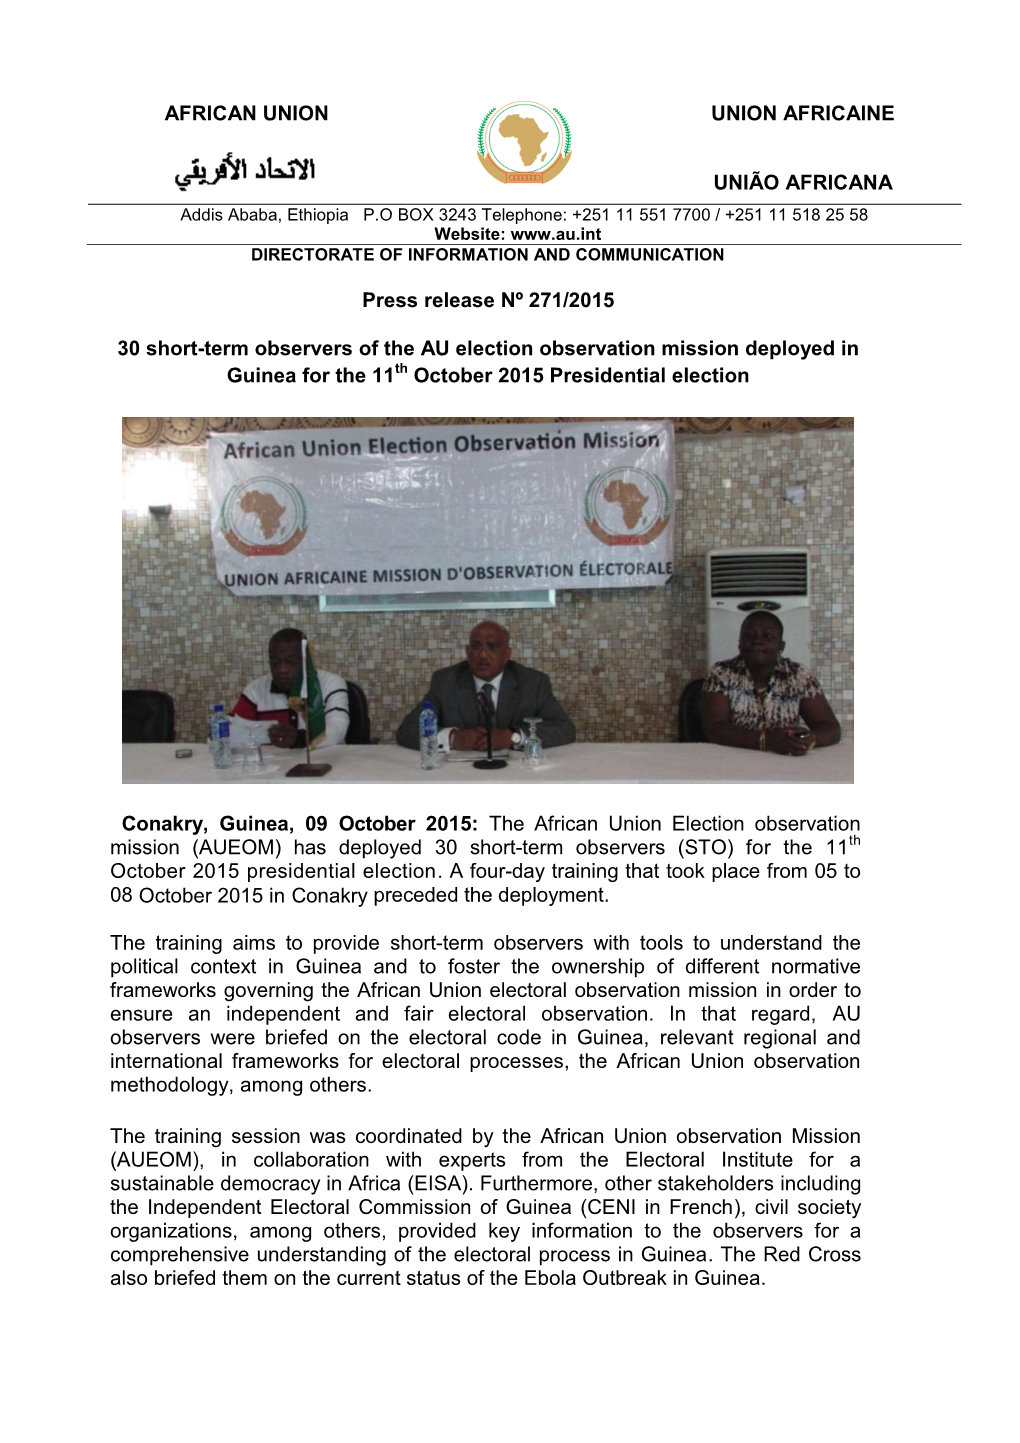 Press Release Nº 271/2015 30 Short-Term Observers of the AU